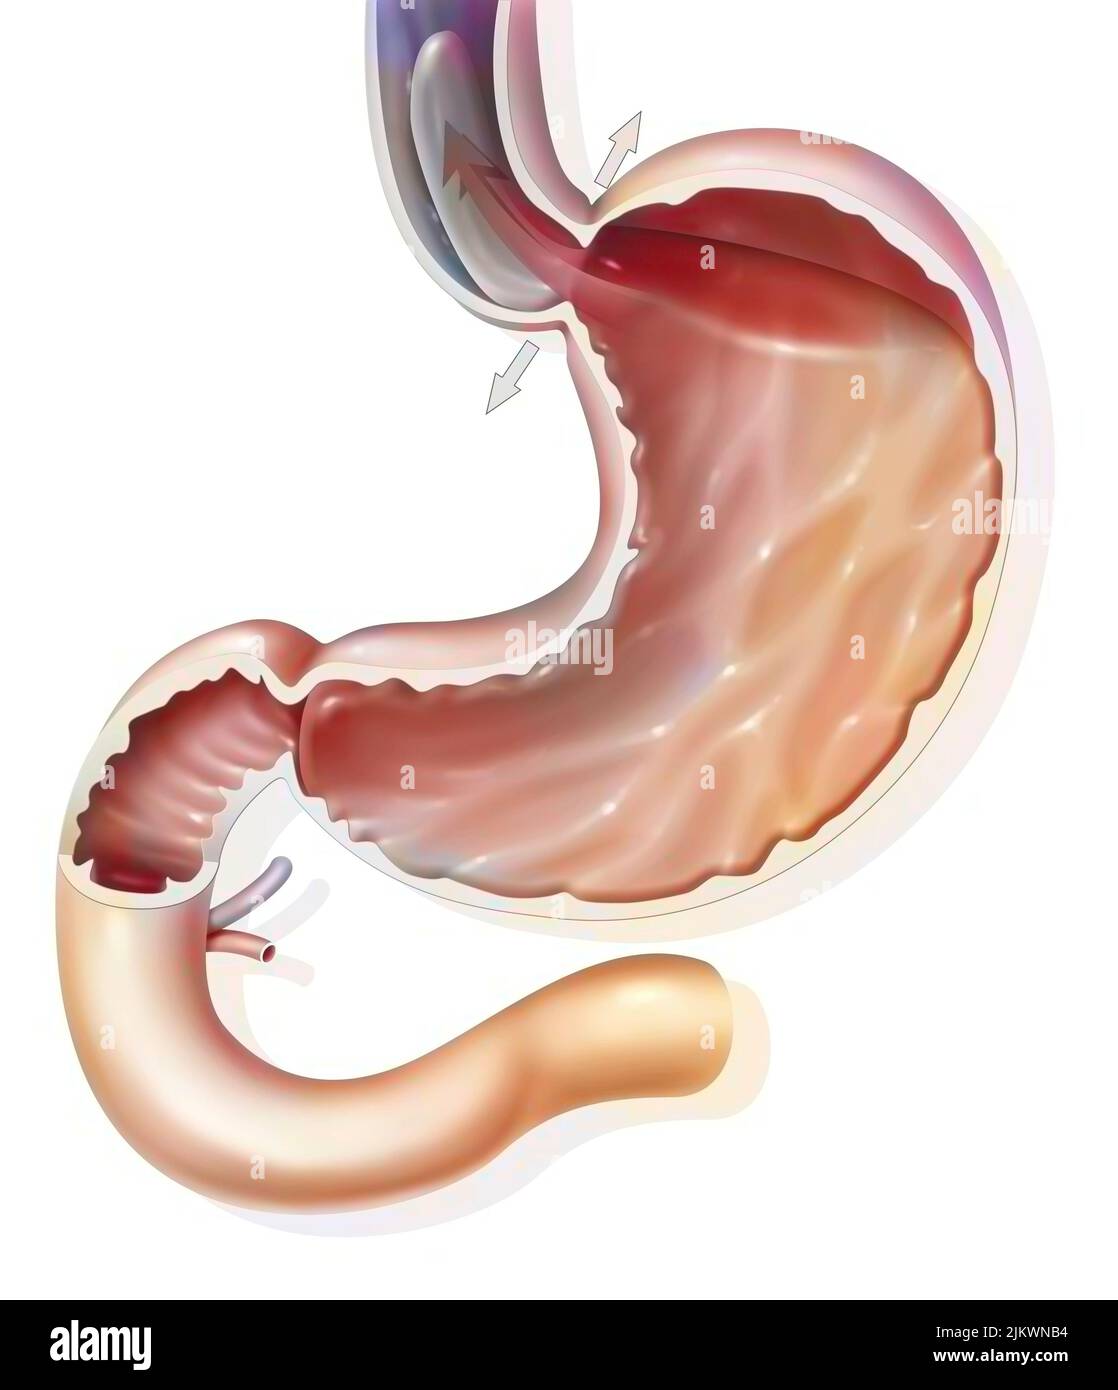 Estomac : reflux gastro-oesophagien dans le sphincter gastro-oesophagien. Banque D'Images